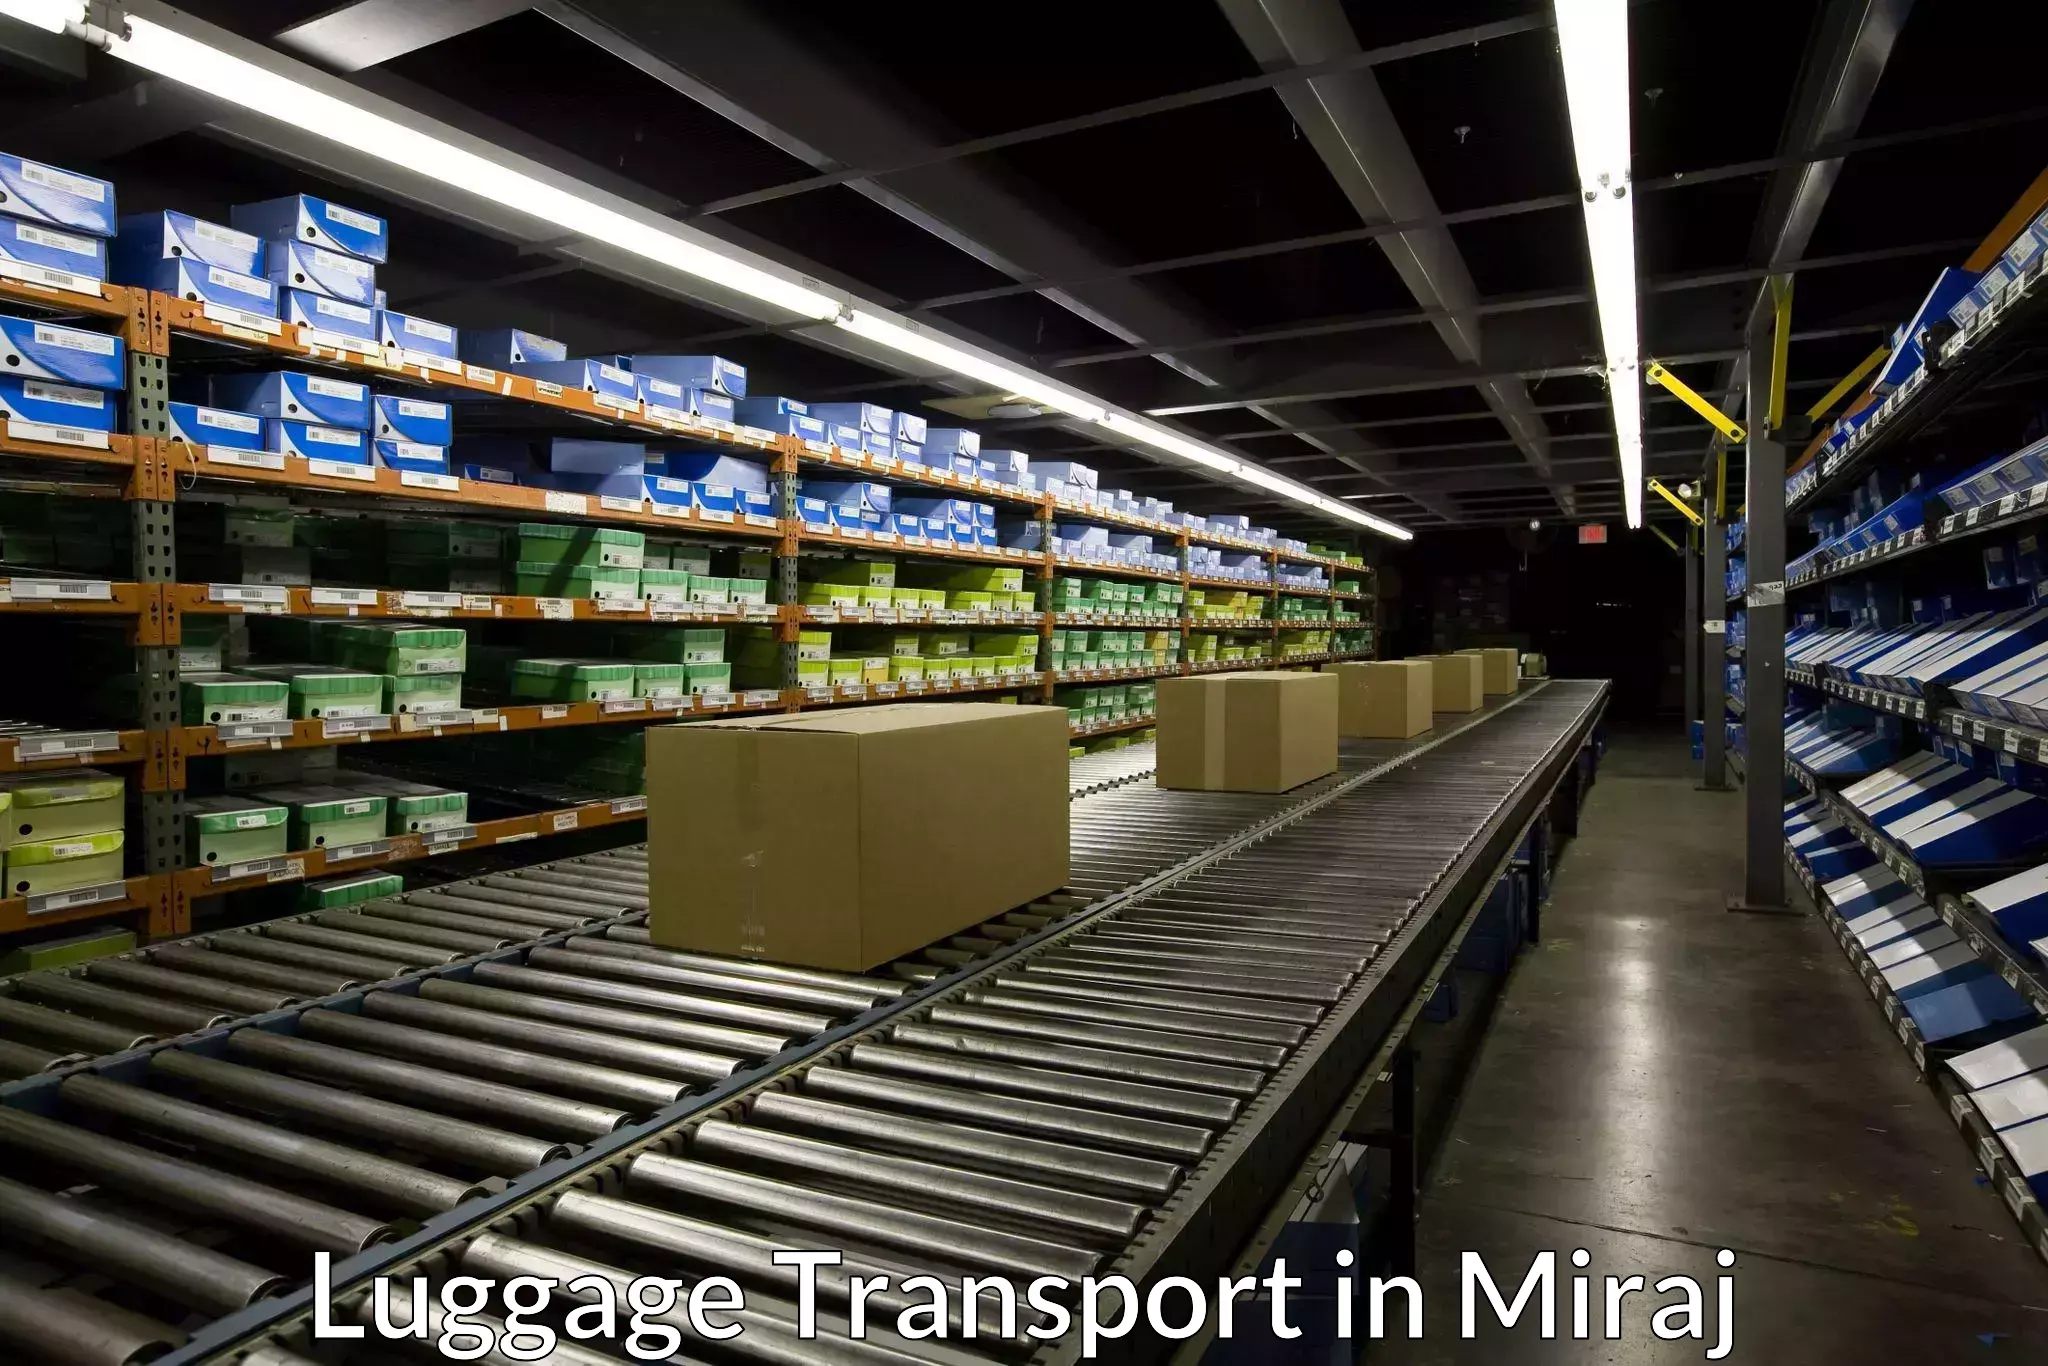 Luggage transport solutions in Miraj